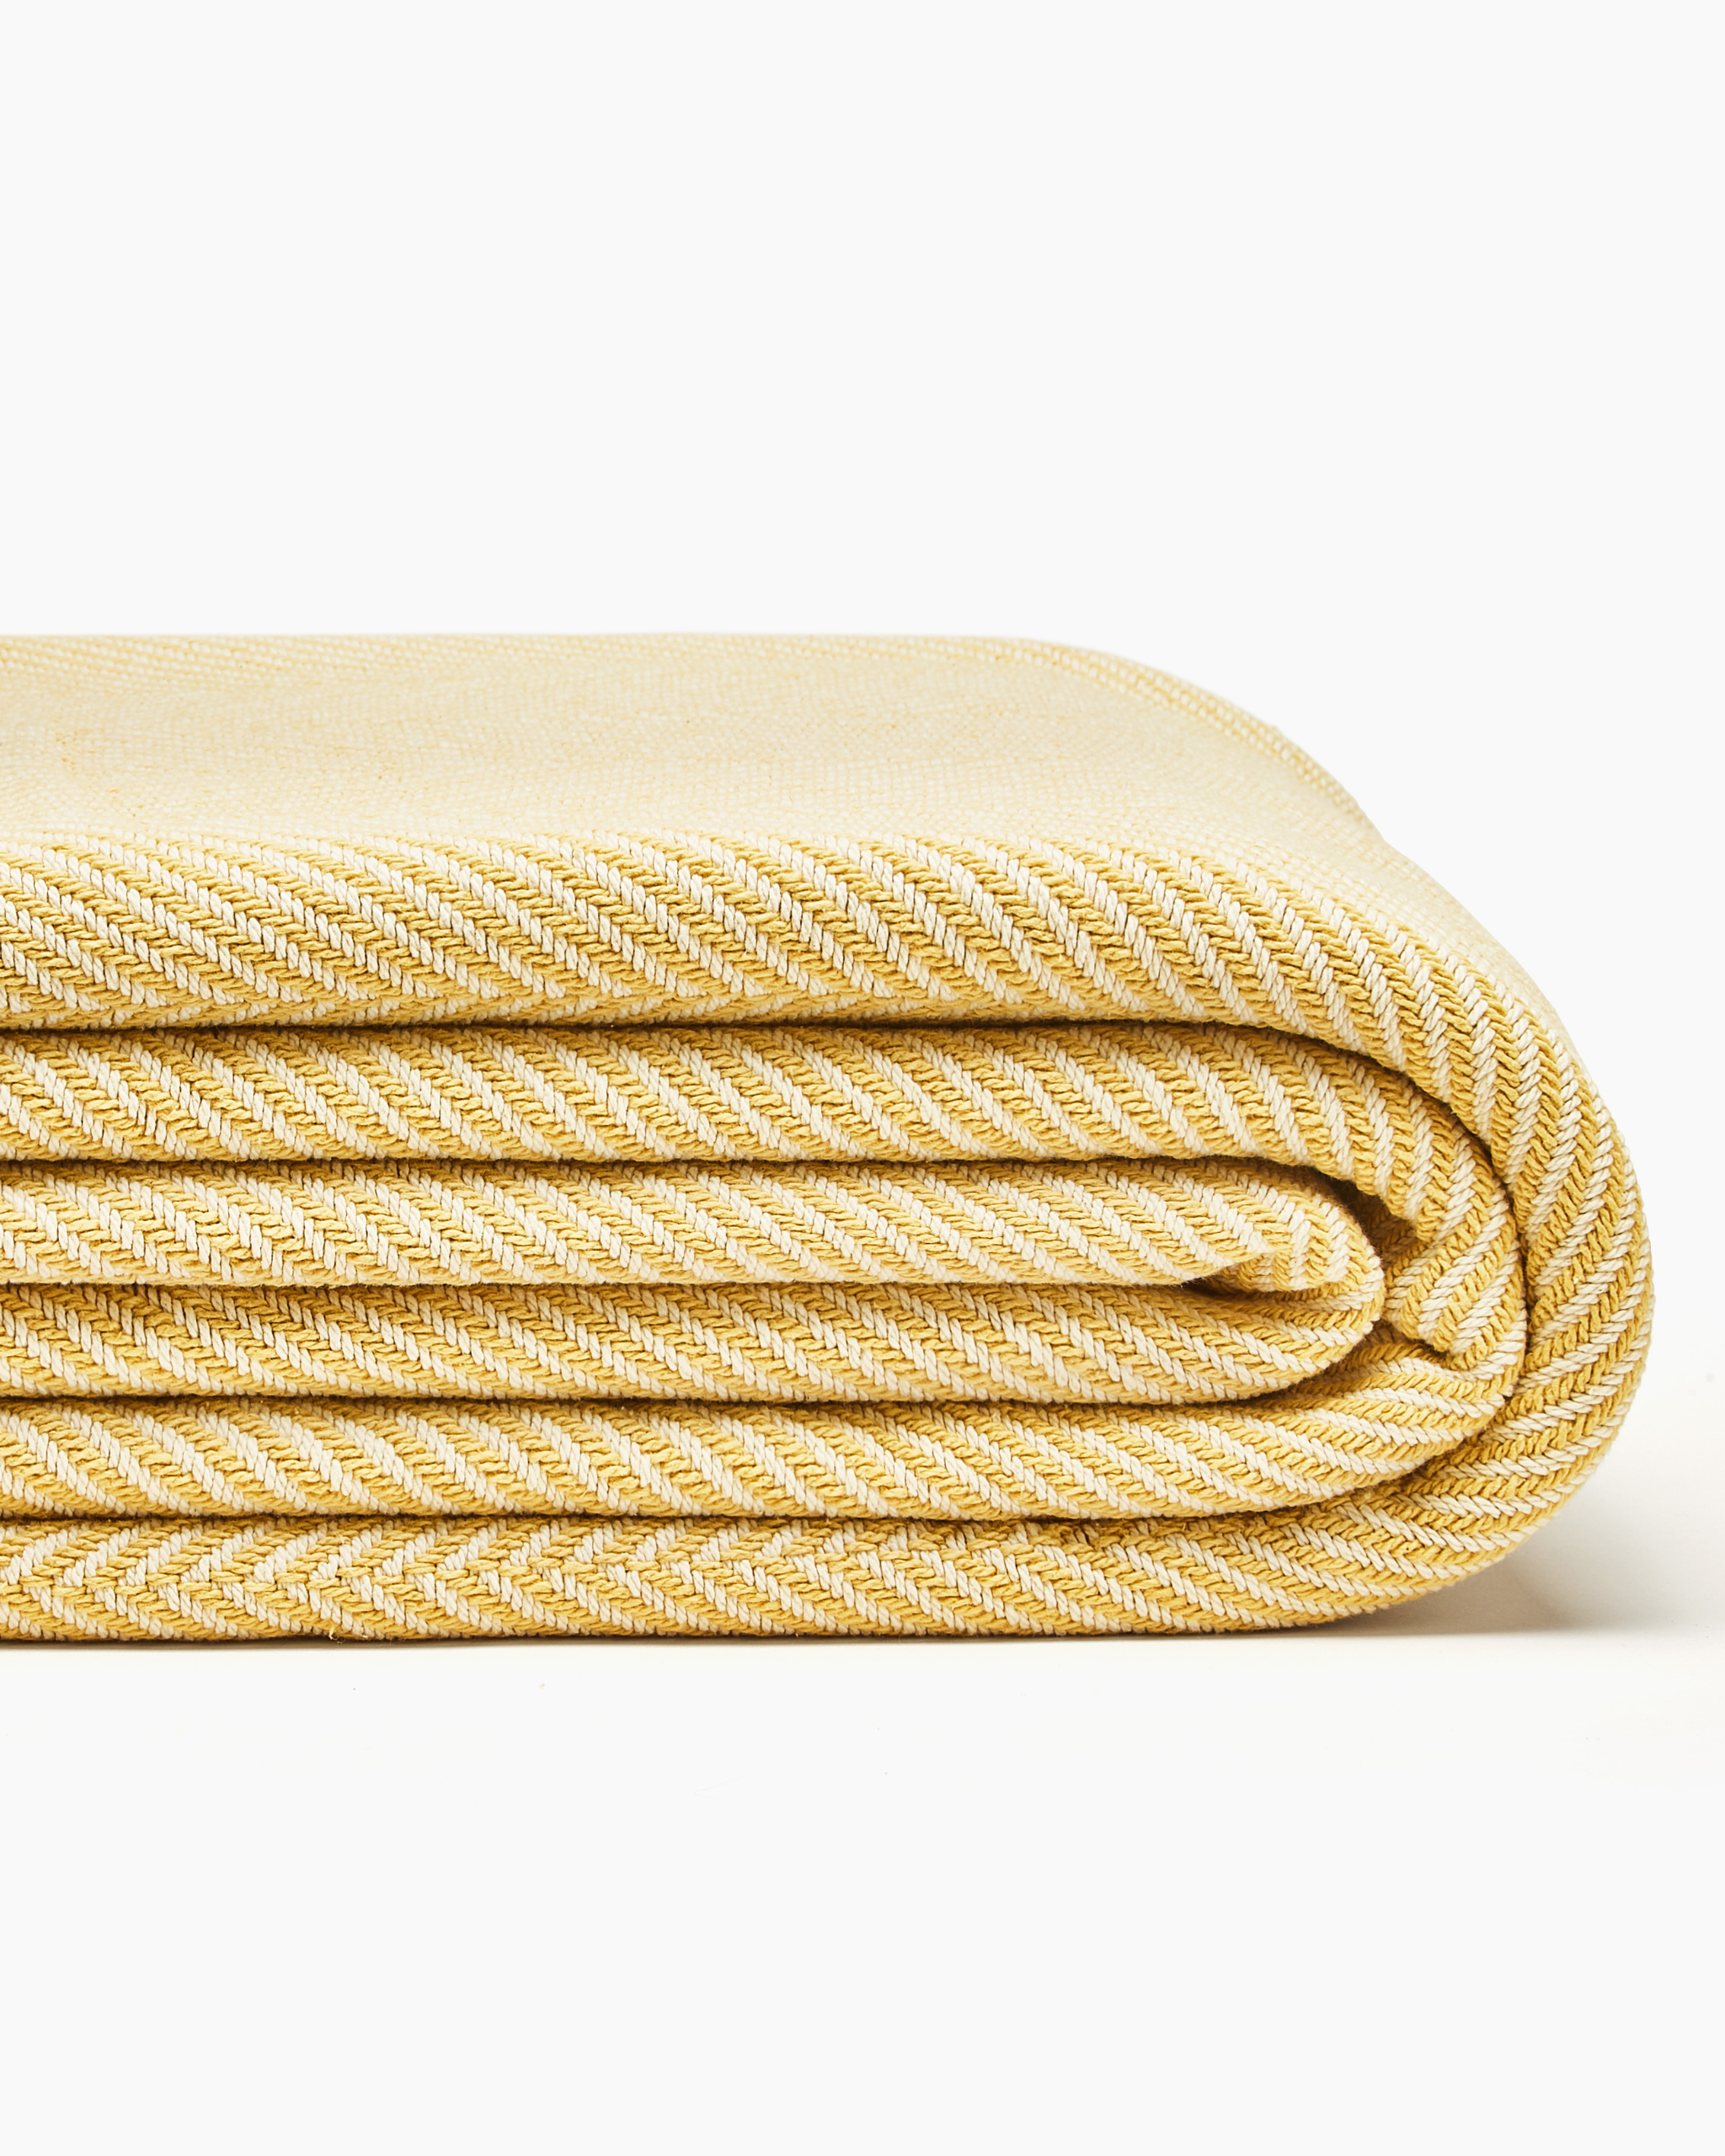 https://cdn.shopify.com/s/files/1/0984/2886/files/made-in-the-usa-cotton-herringbone-blanket-yellow-best-blanket-2023-award-winner.png?v=1683924497&width=2048